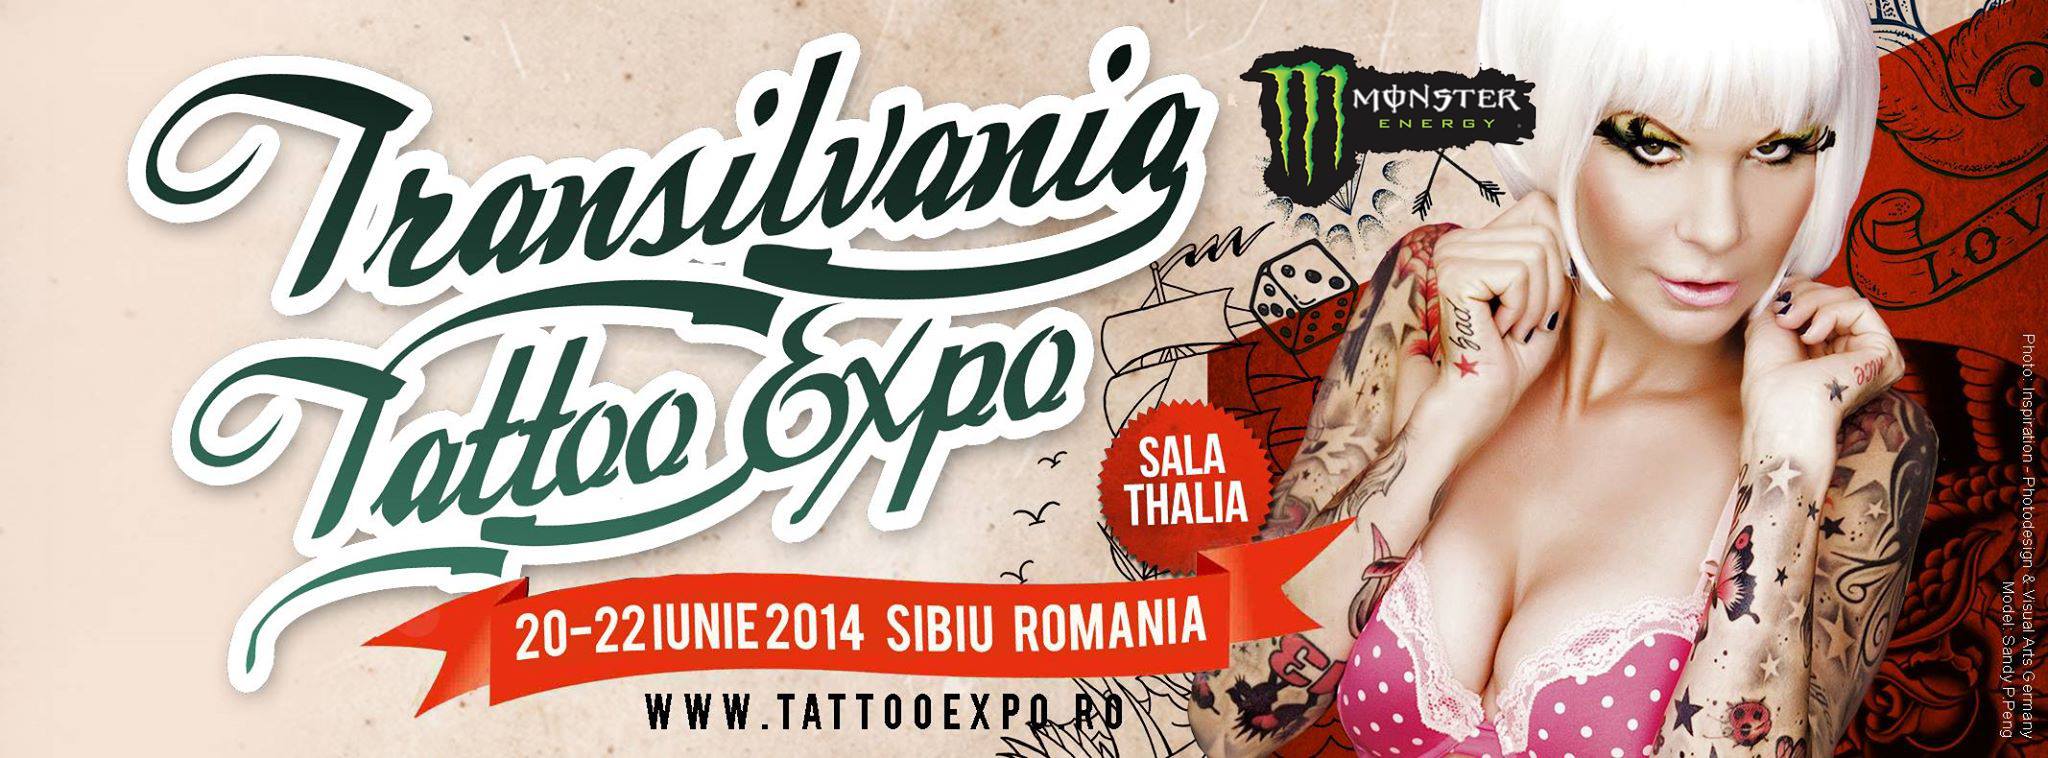 Transilvania Tattoo Expo 2014